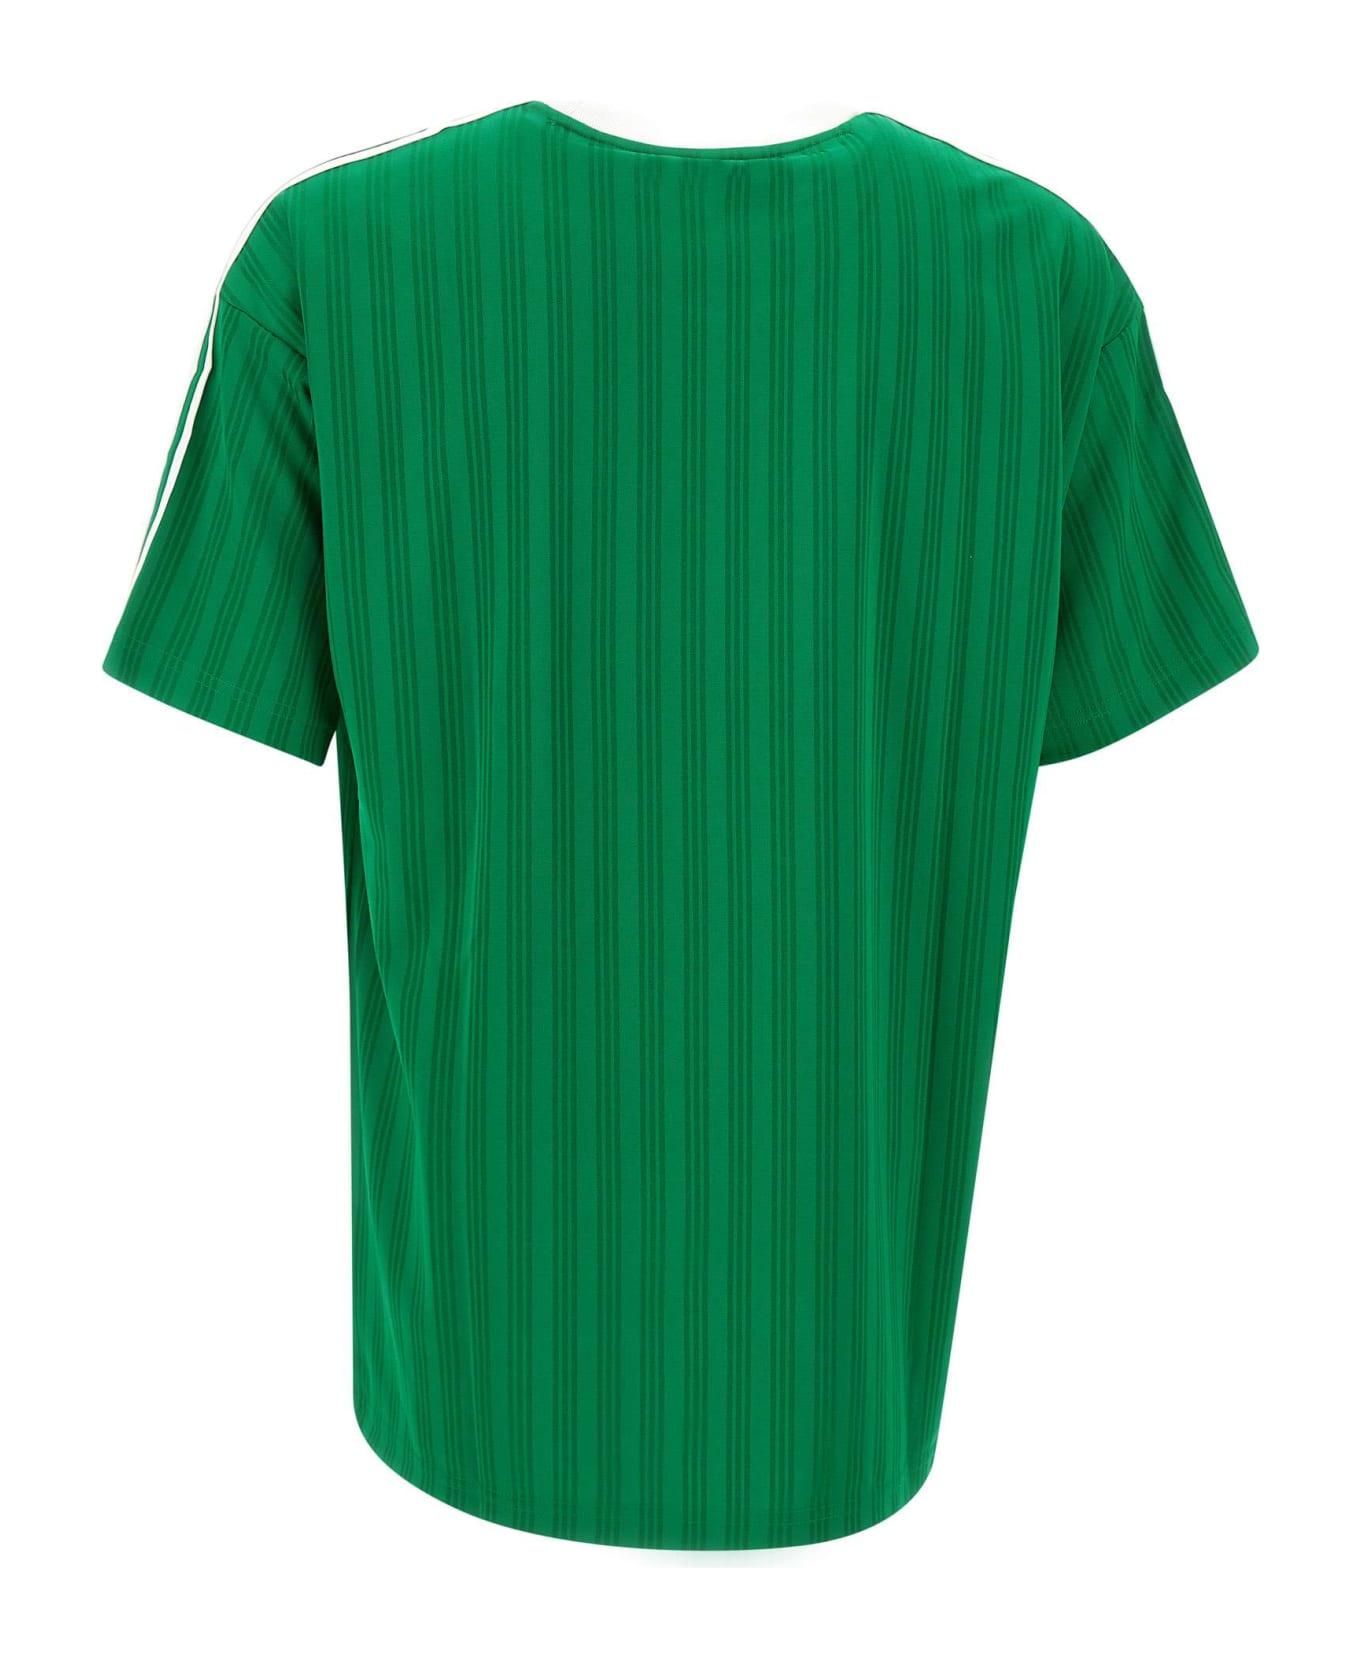 Adidas "adicolor" Jacquard Fabric T-shirt - GREEN